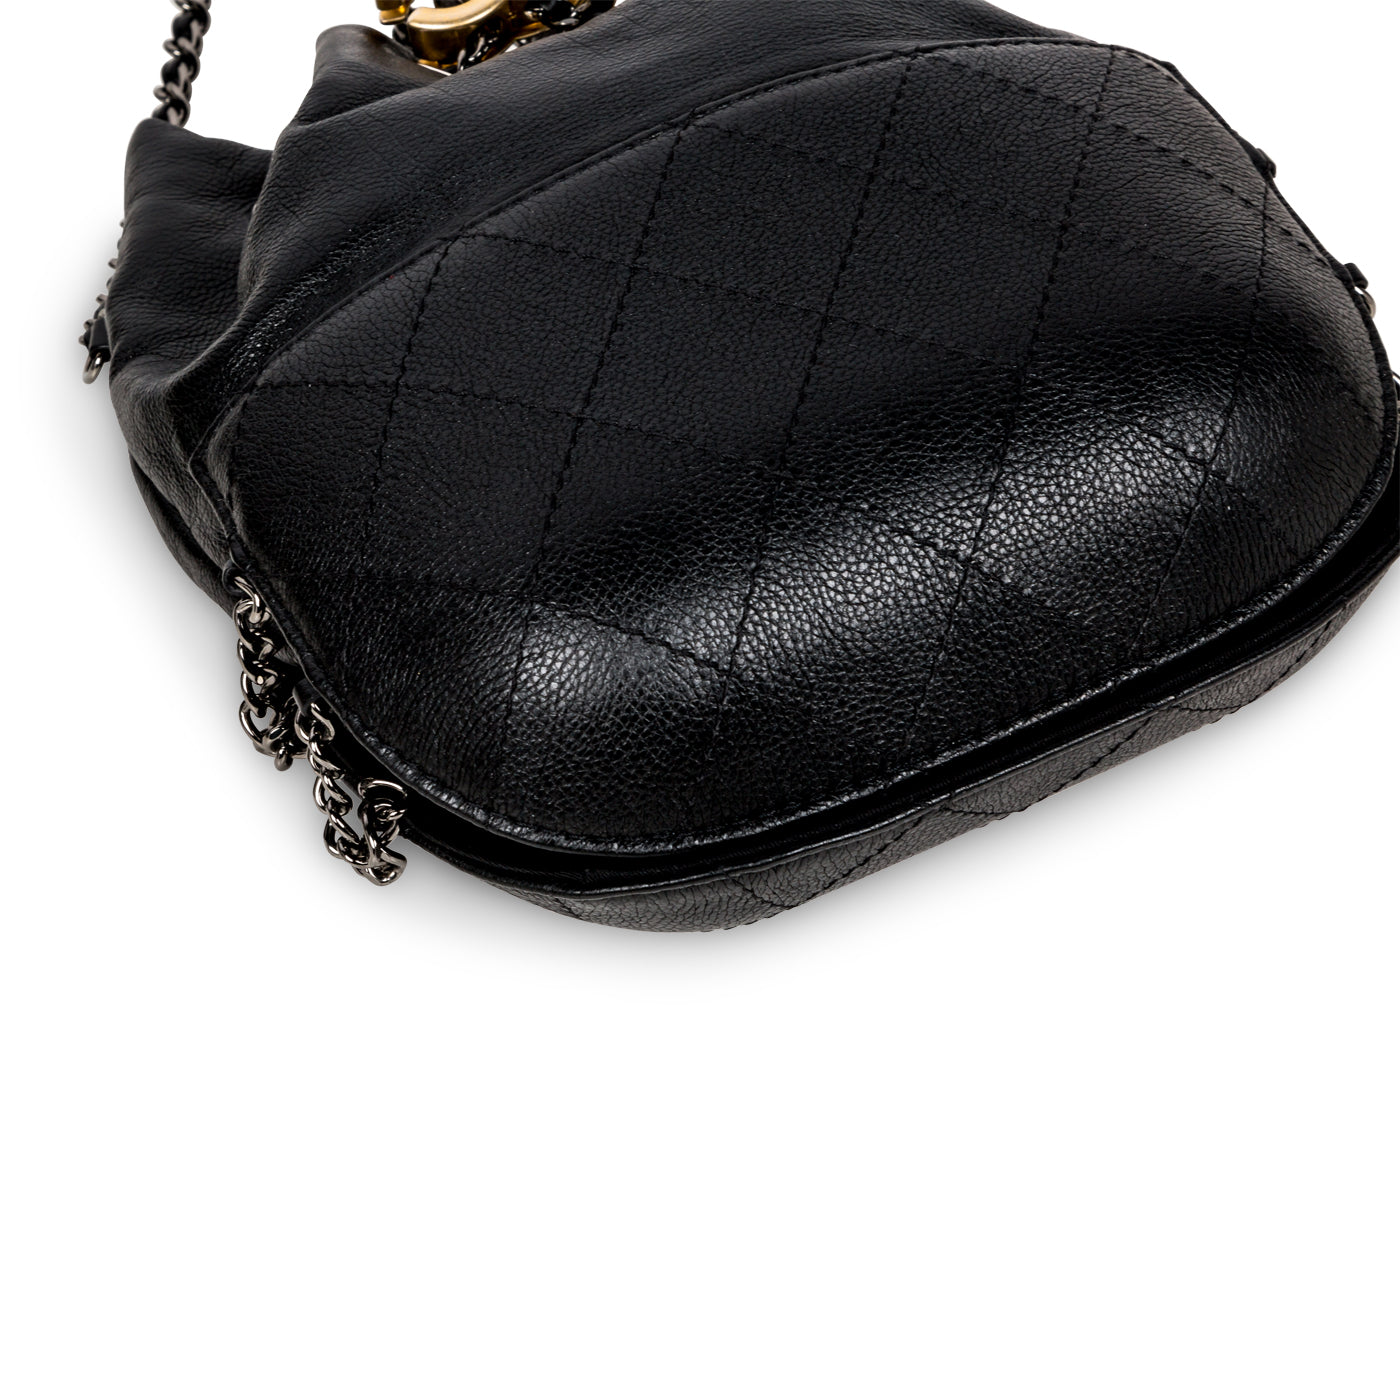 Chanel - Gabrielle Bucket Bag - Black - Small - Pre-Loved